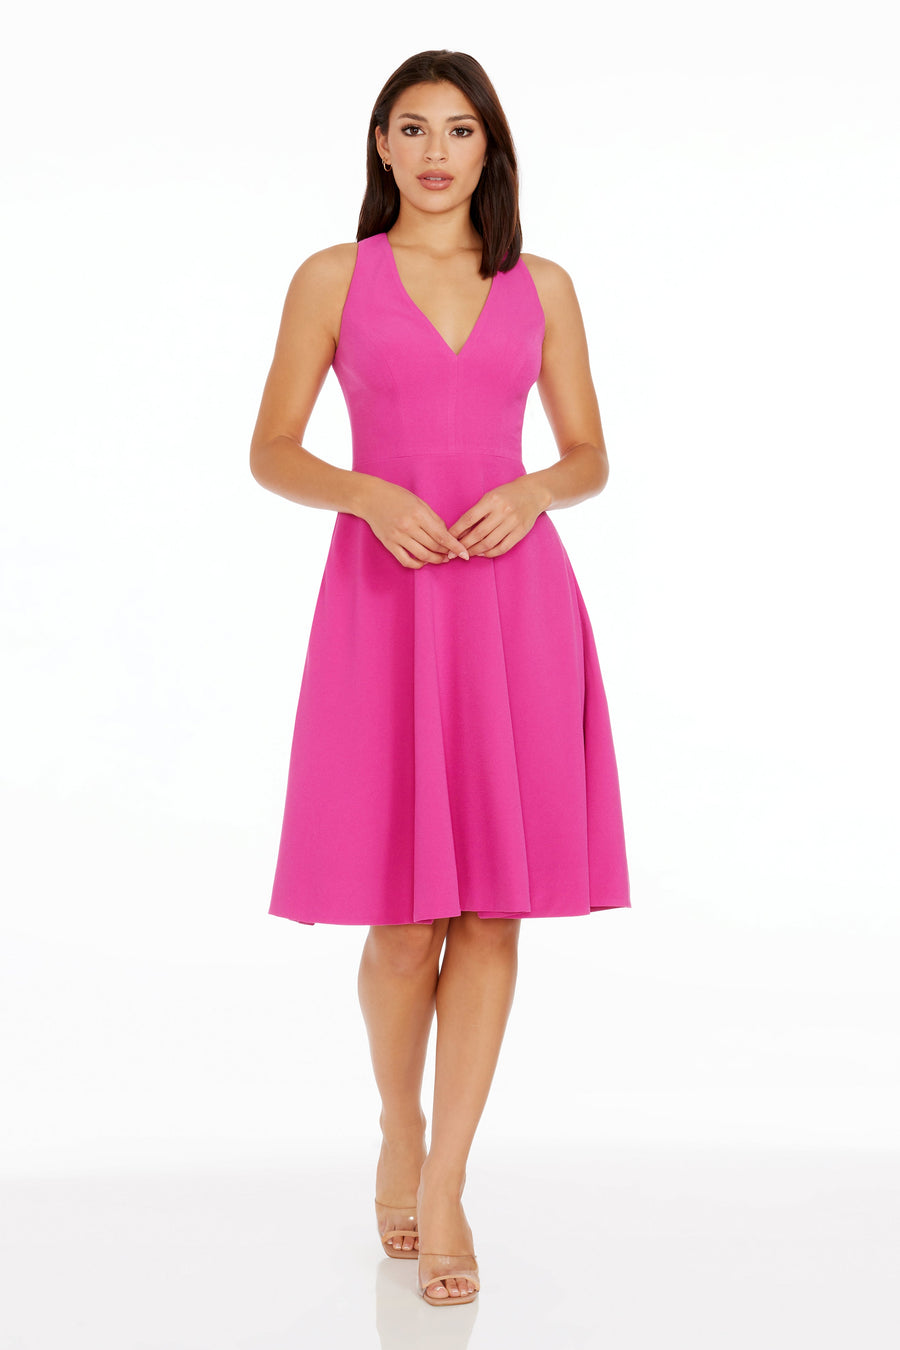 Dress the Population Women's Catalina Solid Sleeveless Fit & Flare Midi  Dress